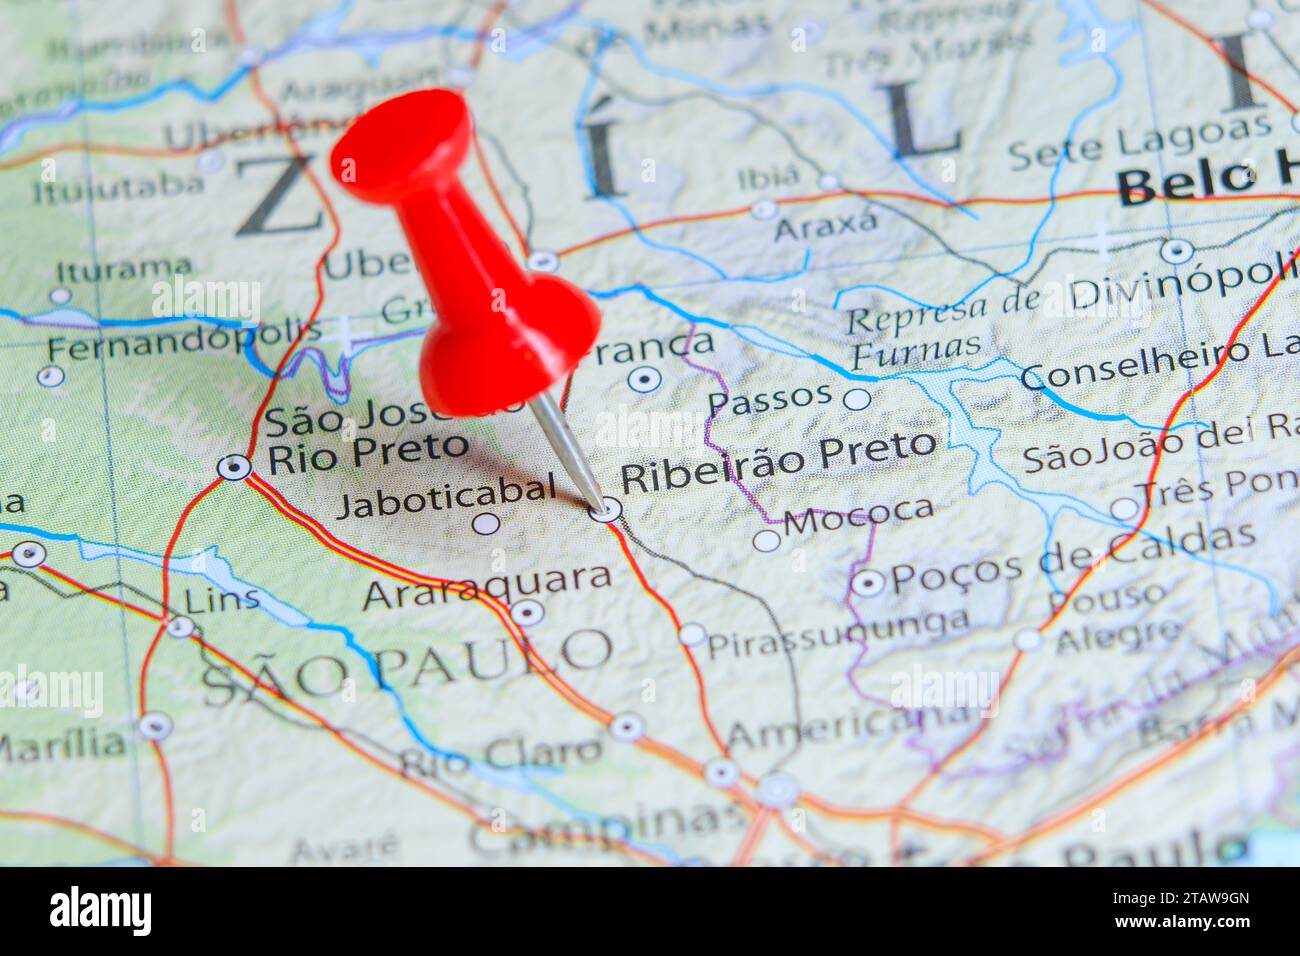 Ribeirao Preto, Brazil pin on map Stock Photo